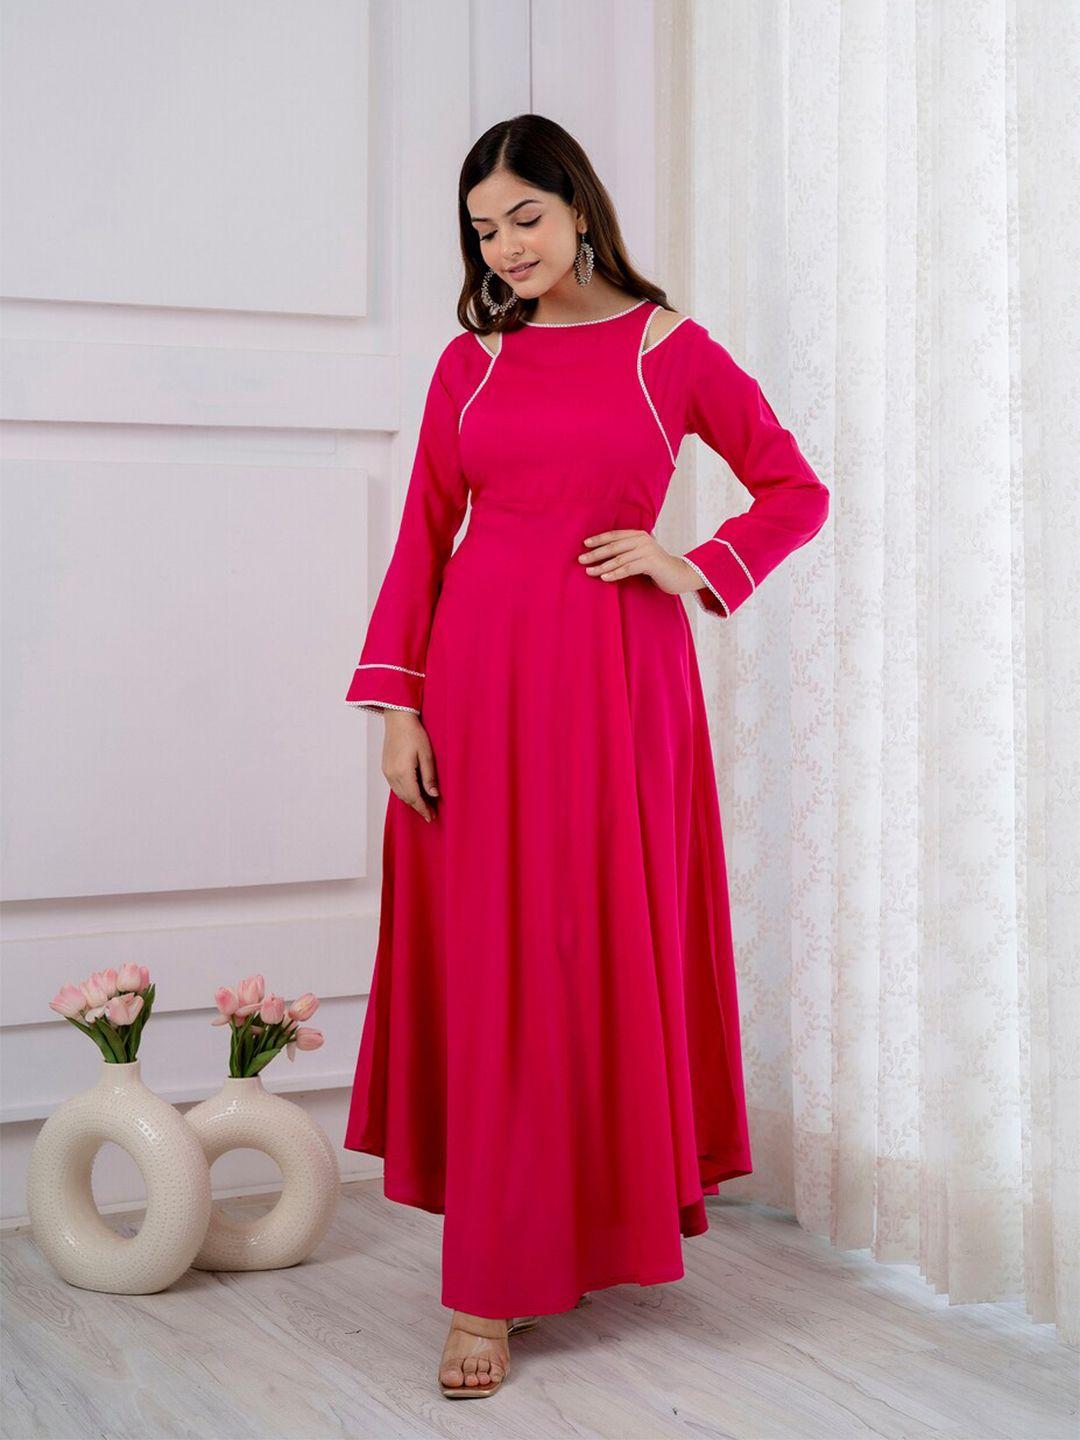 purshottam wala pink applique maxi dress